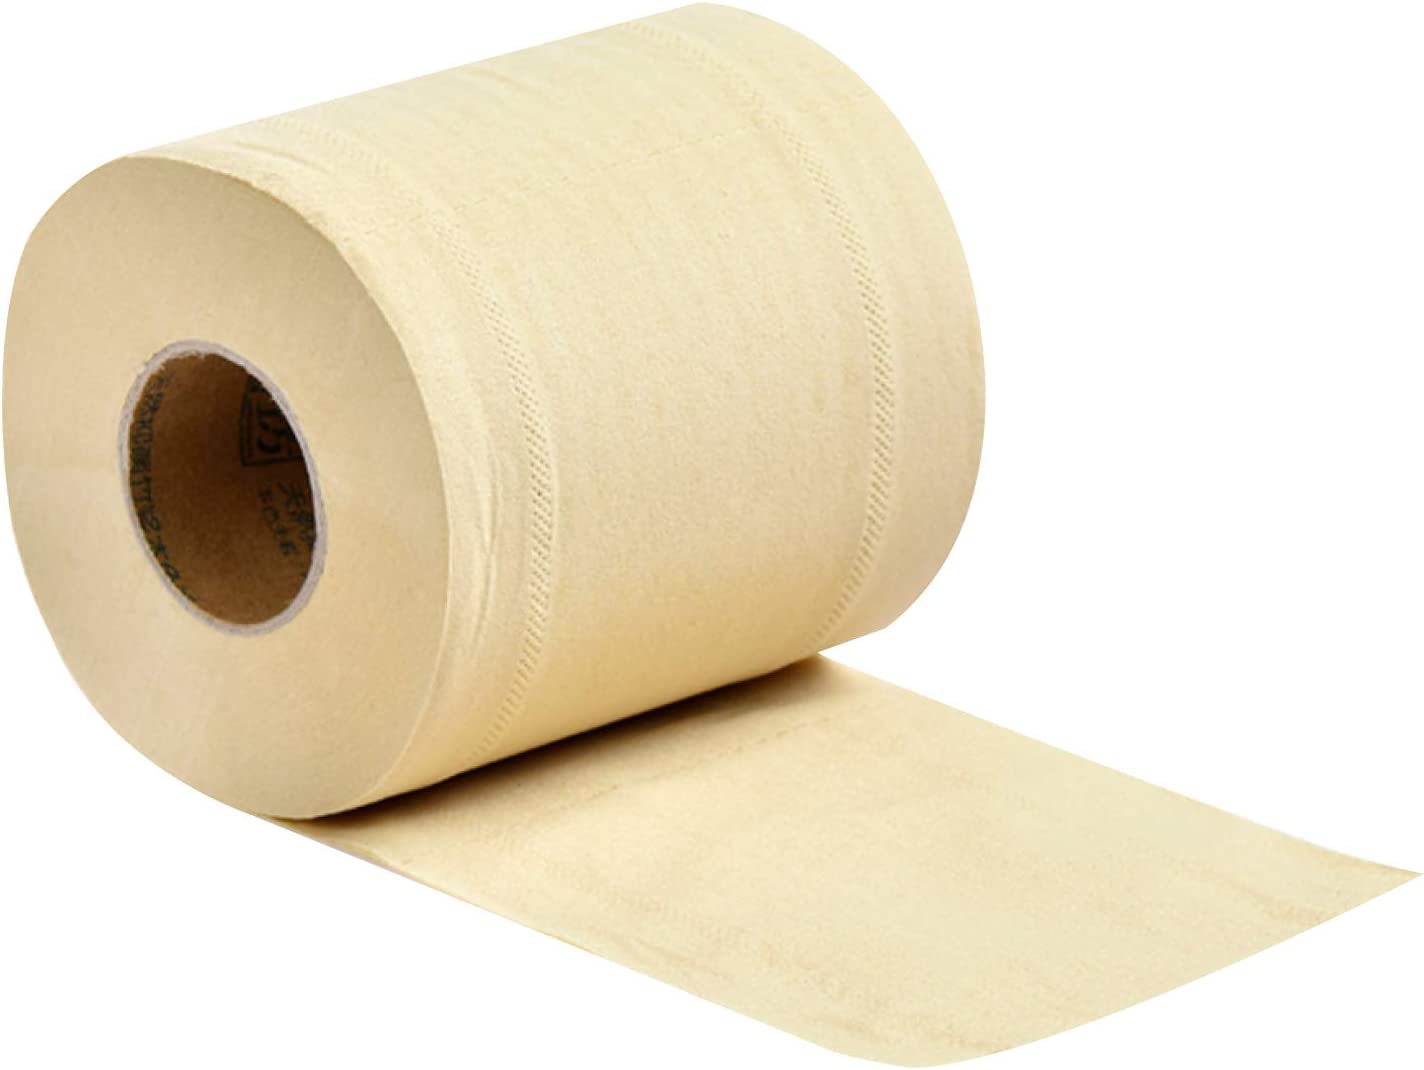  Renova Ultra Soft 3-Ply Toilet Paper Rolls, Black : Health &  Household